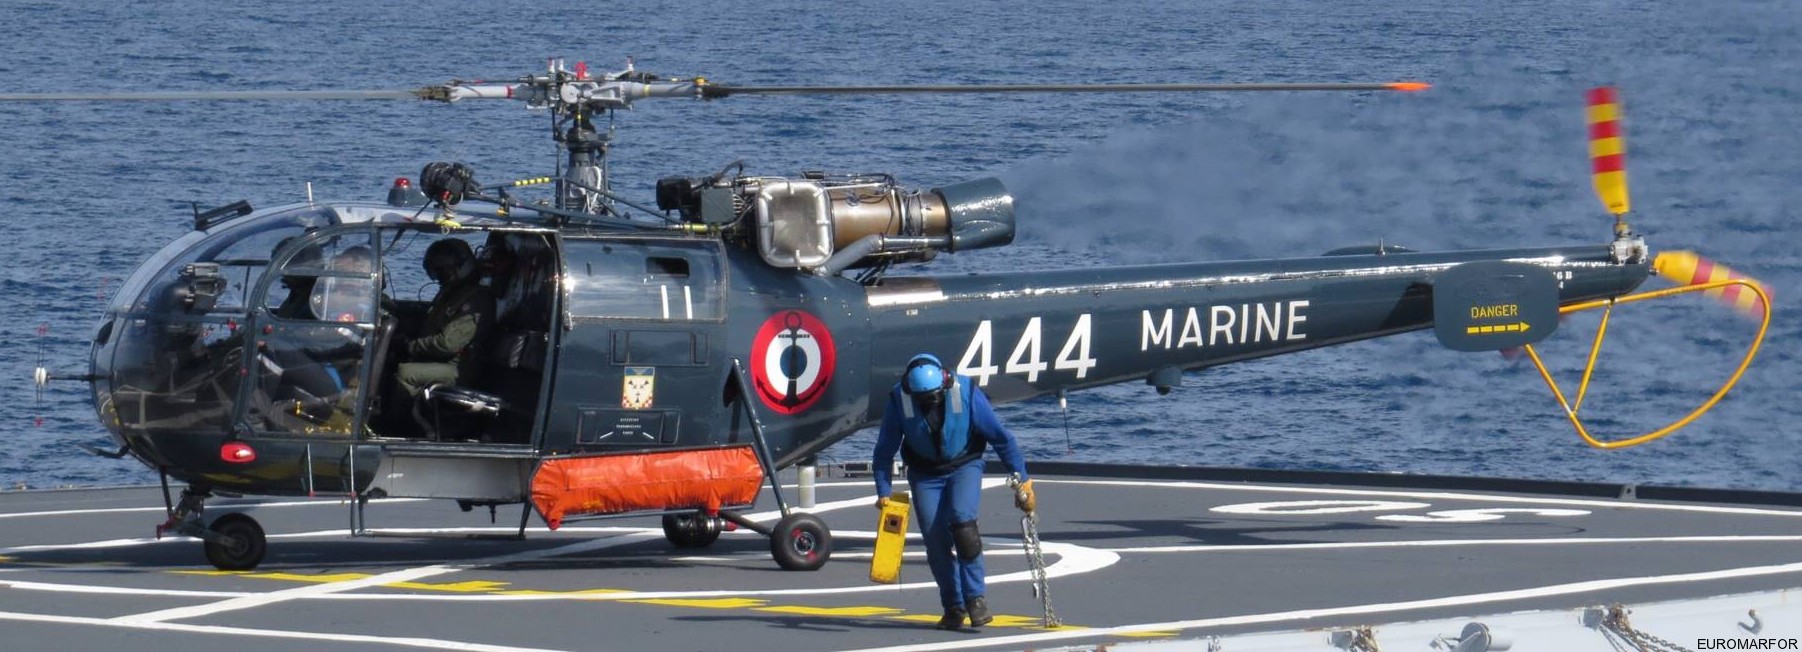 sa 316 319 alouette iii helicopter french navy marine nationale aeronavale flottille 444 31